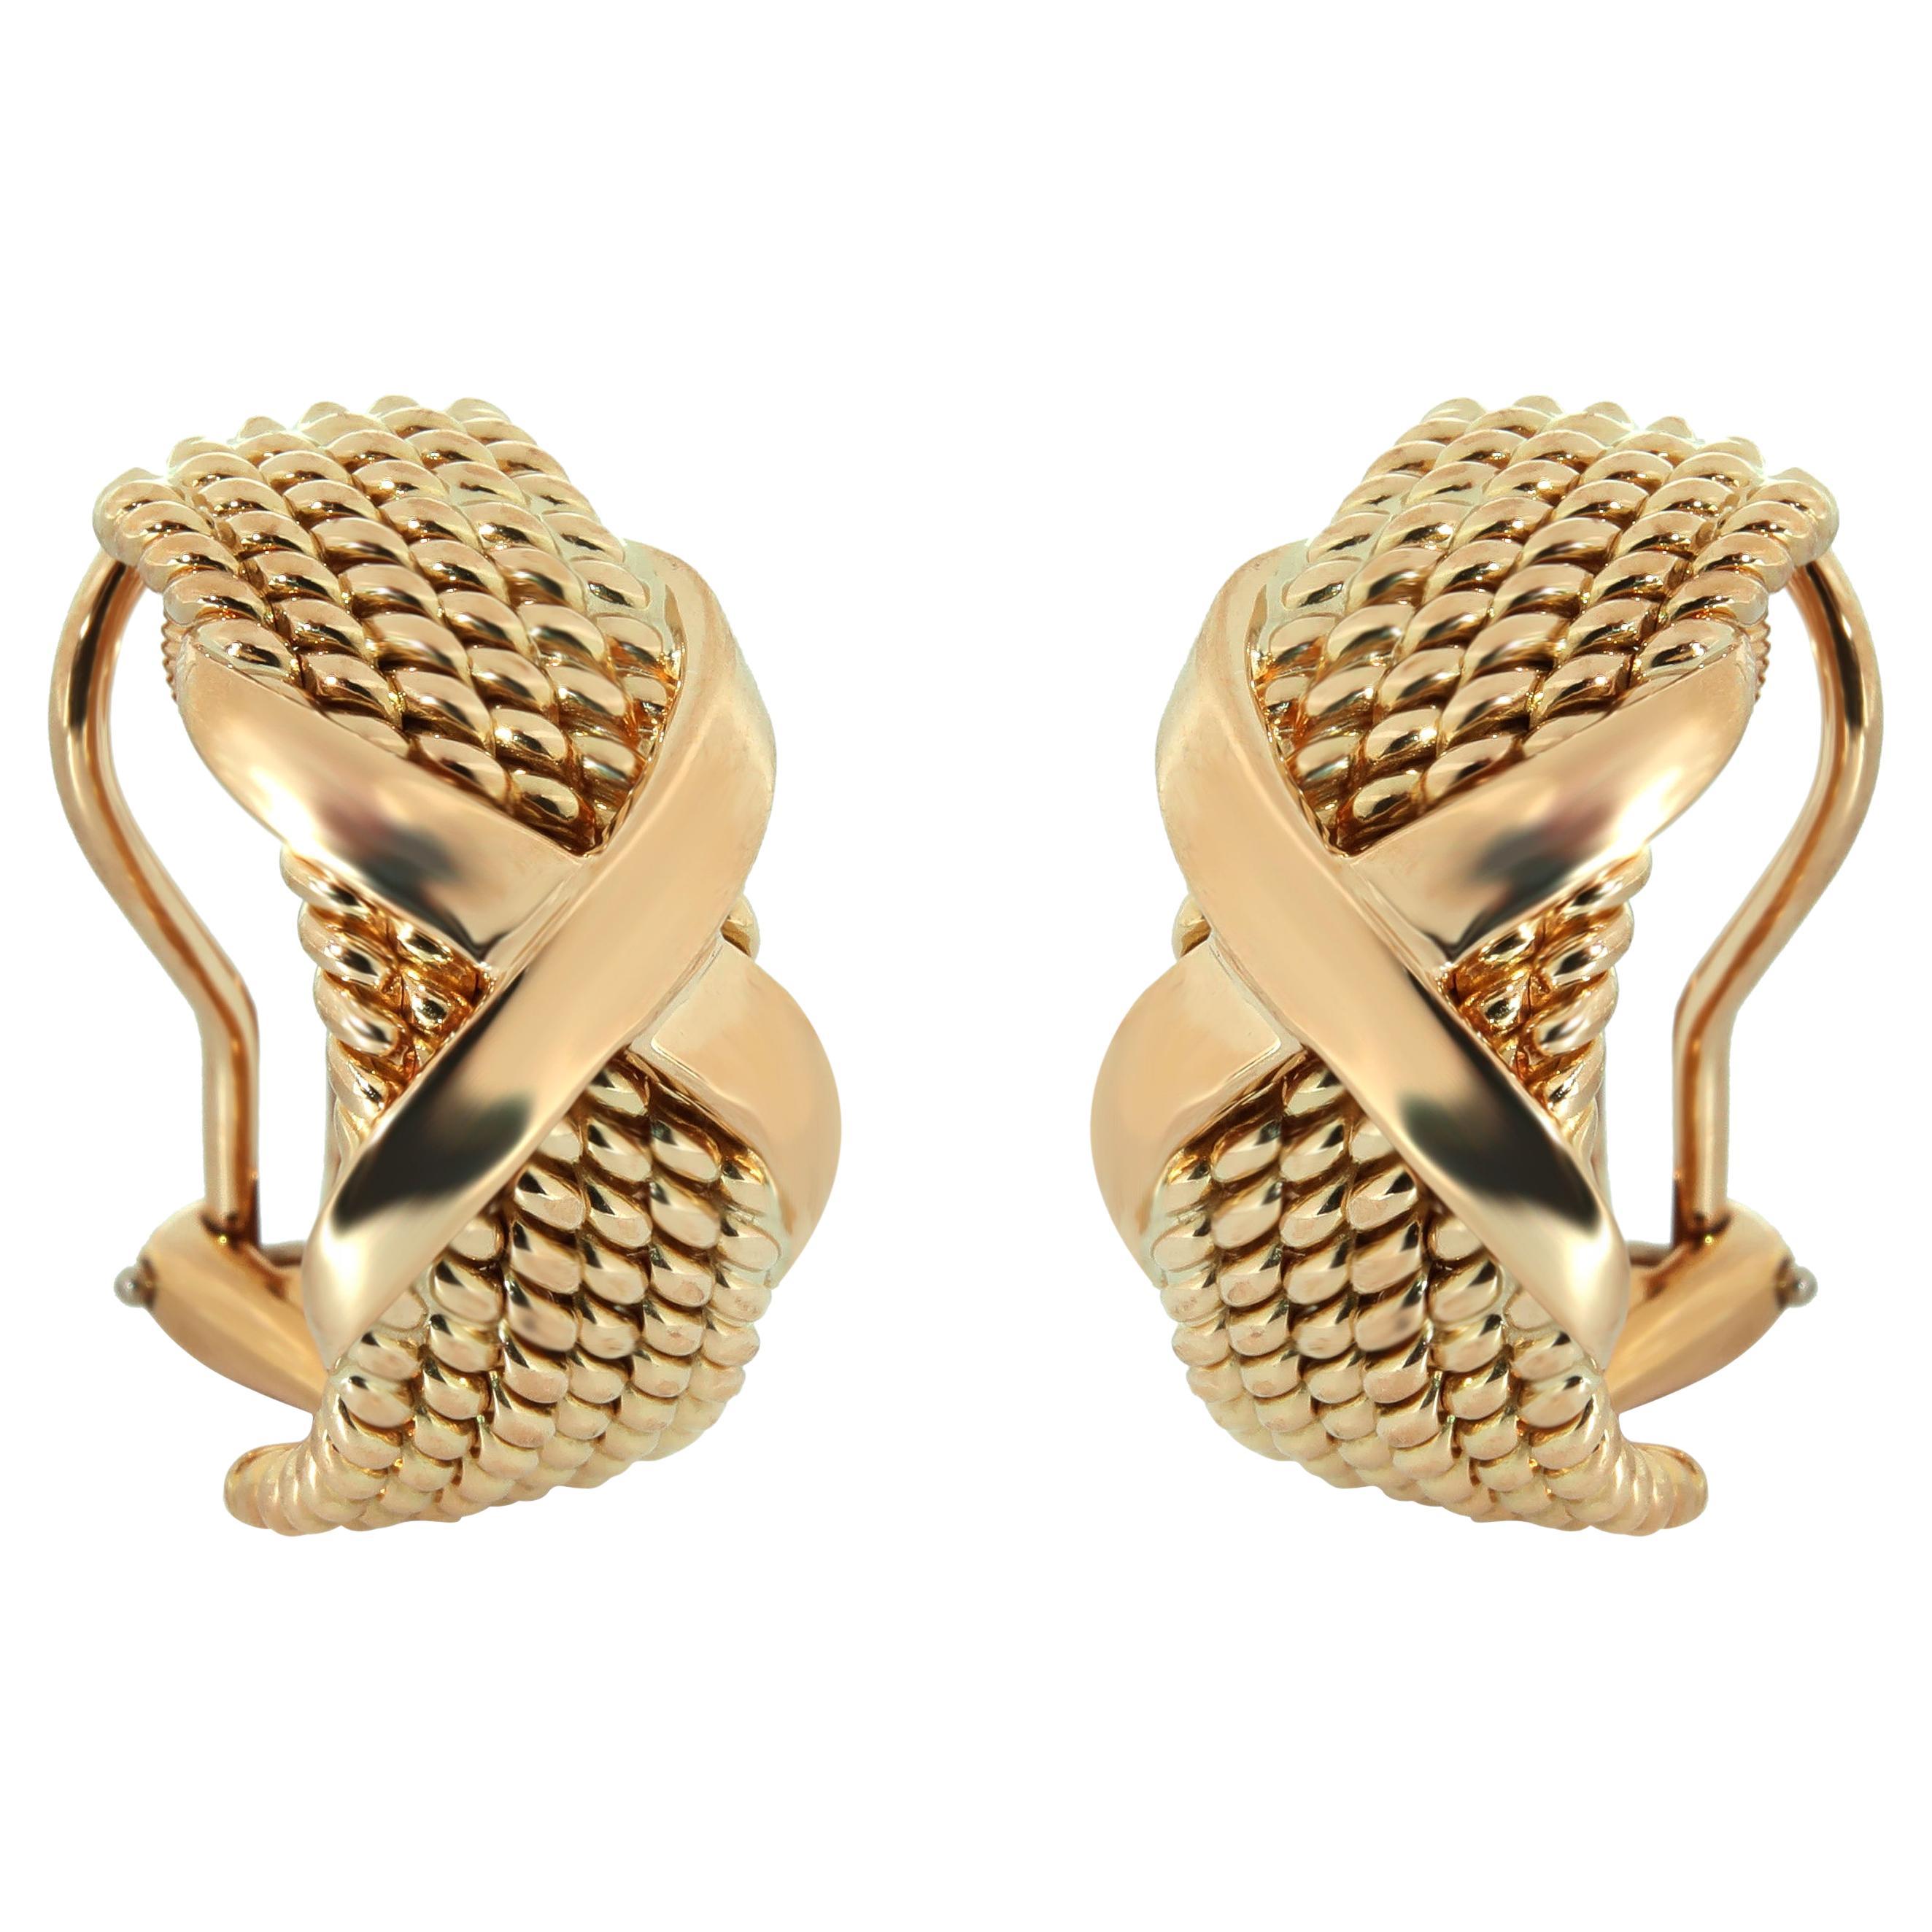 Tiffany & Co. Schlumberger Vintage X Earrings in 18K Yellow Gold